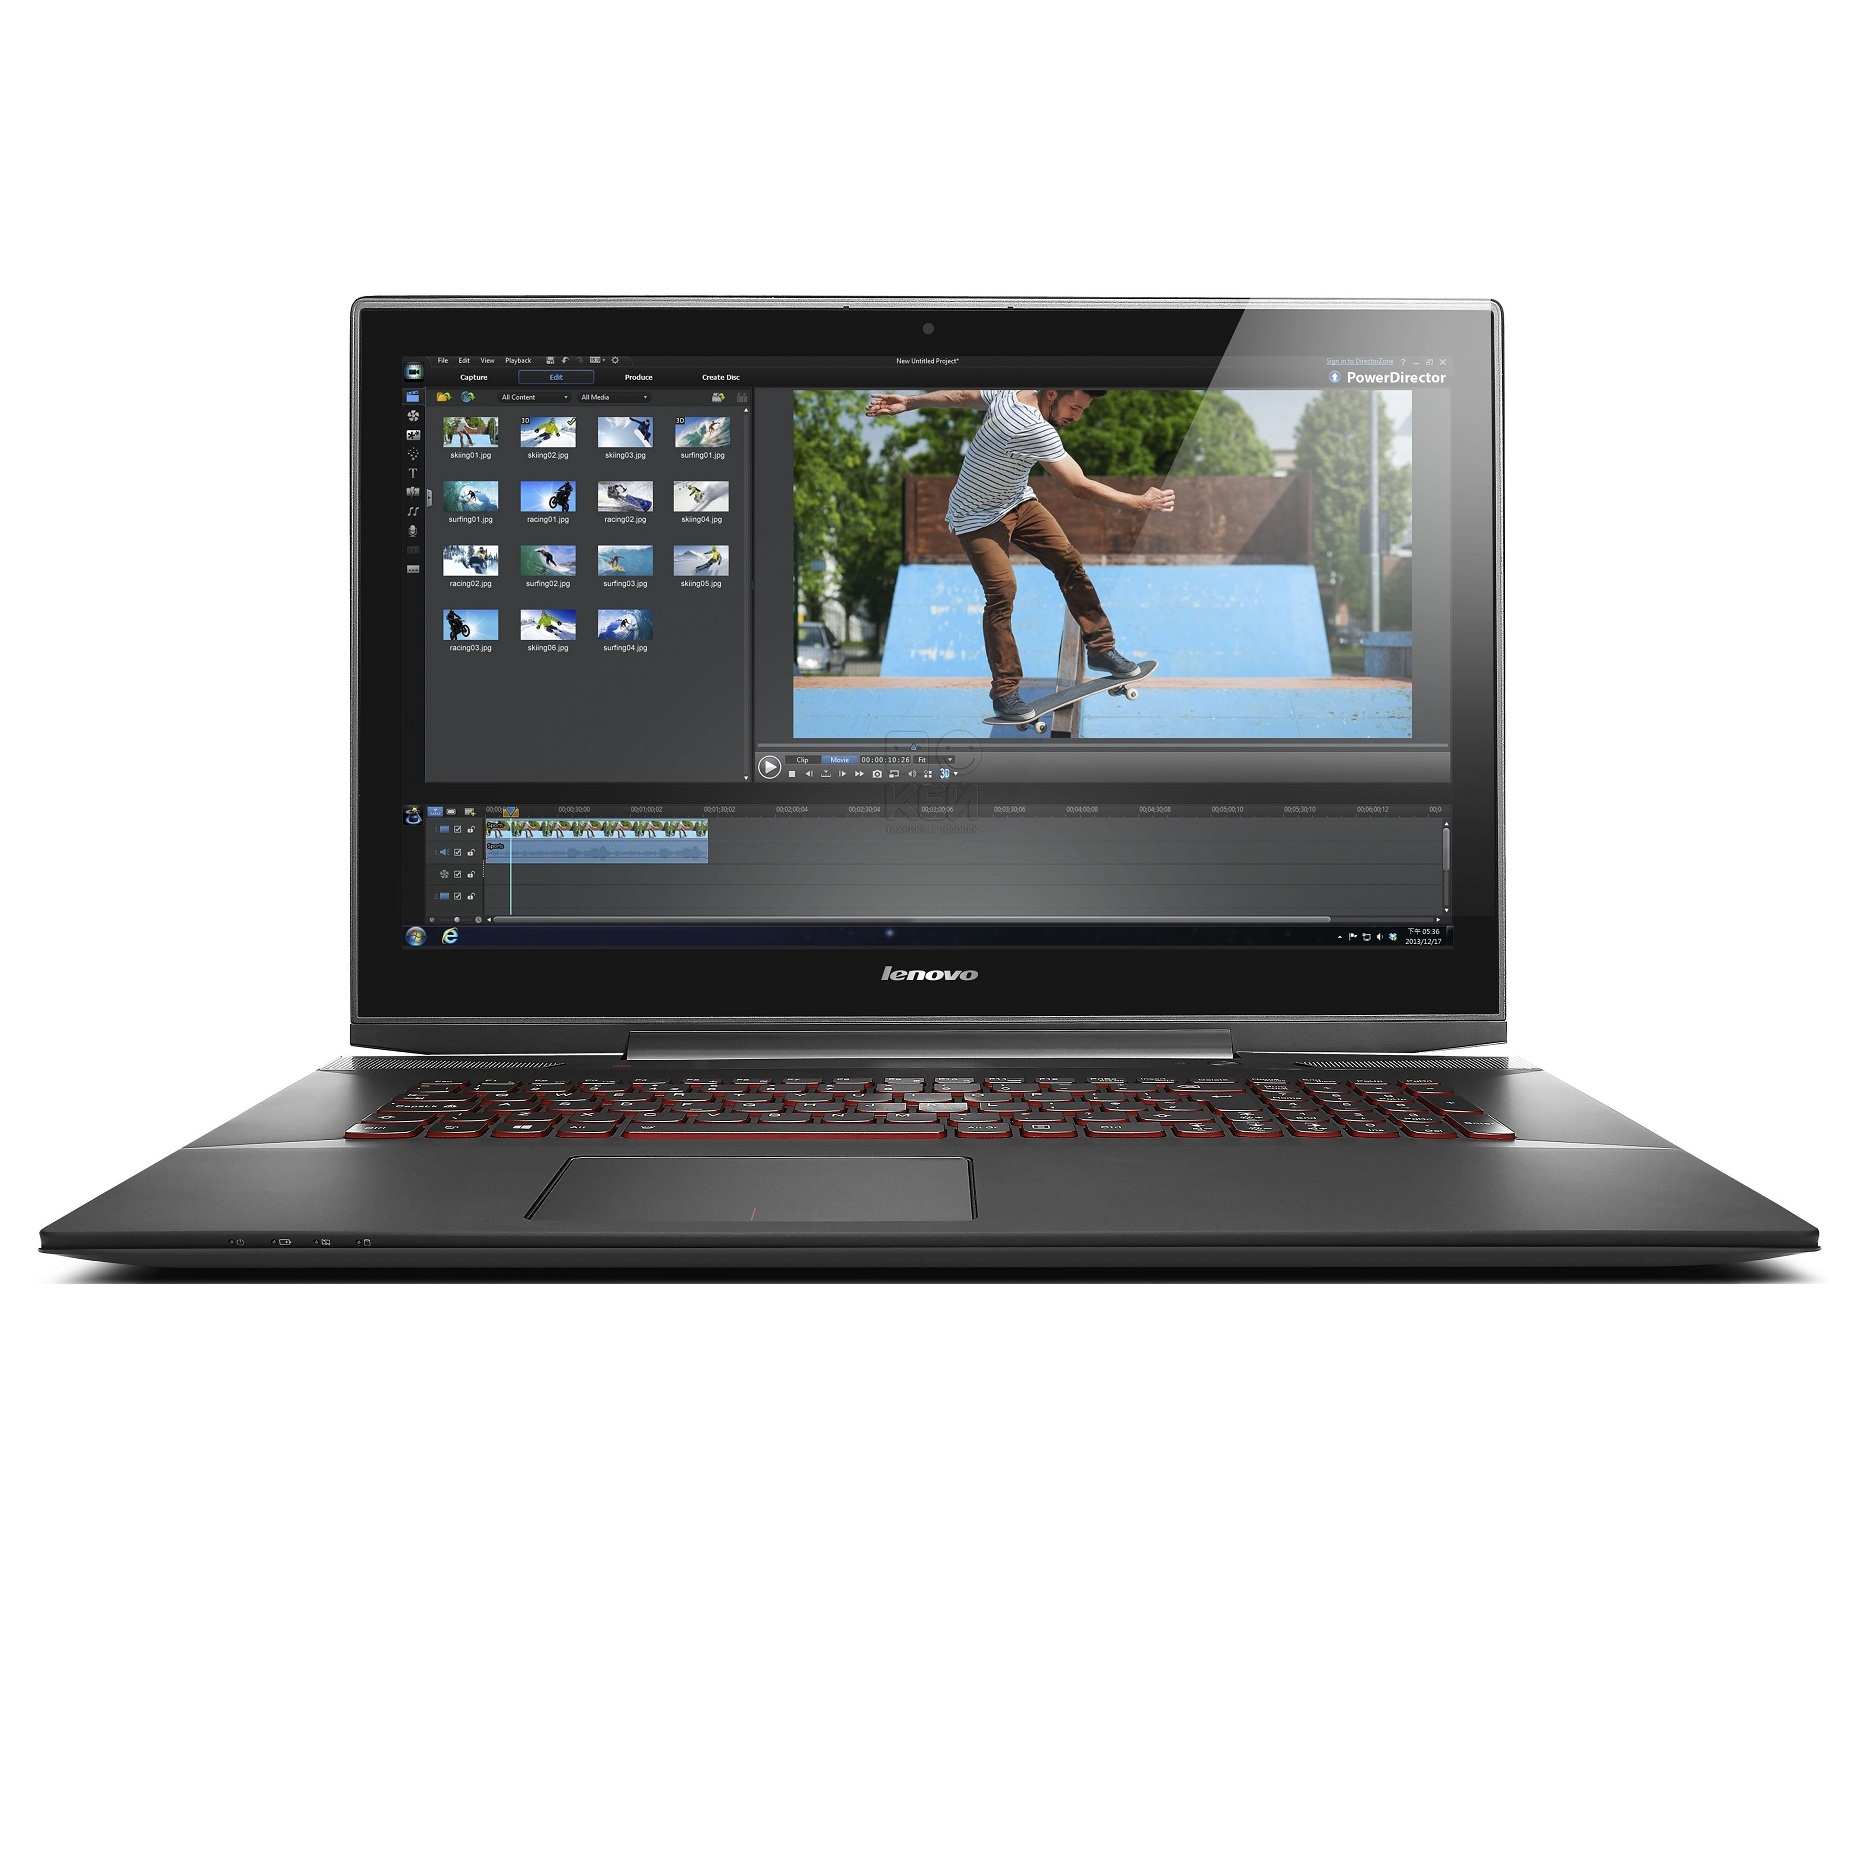 Laptop Lenovo Y7070 (80DU00NHVN) - Core i7 4720HQ, RAM 16GB, HDD 1TB,  GTX960M 4GB Win 10 FHD Touch 1856WD